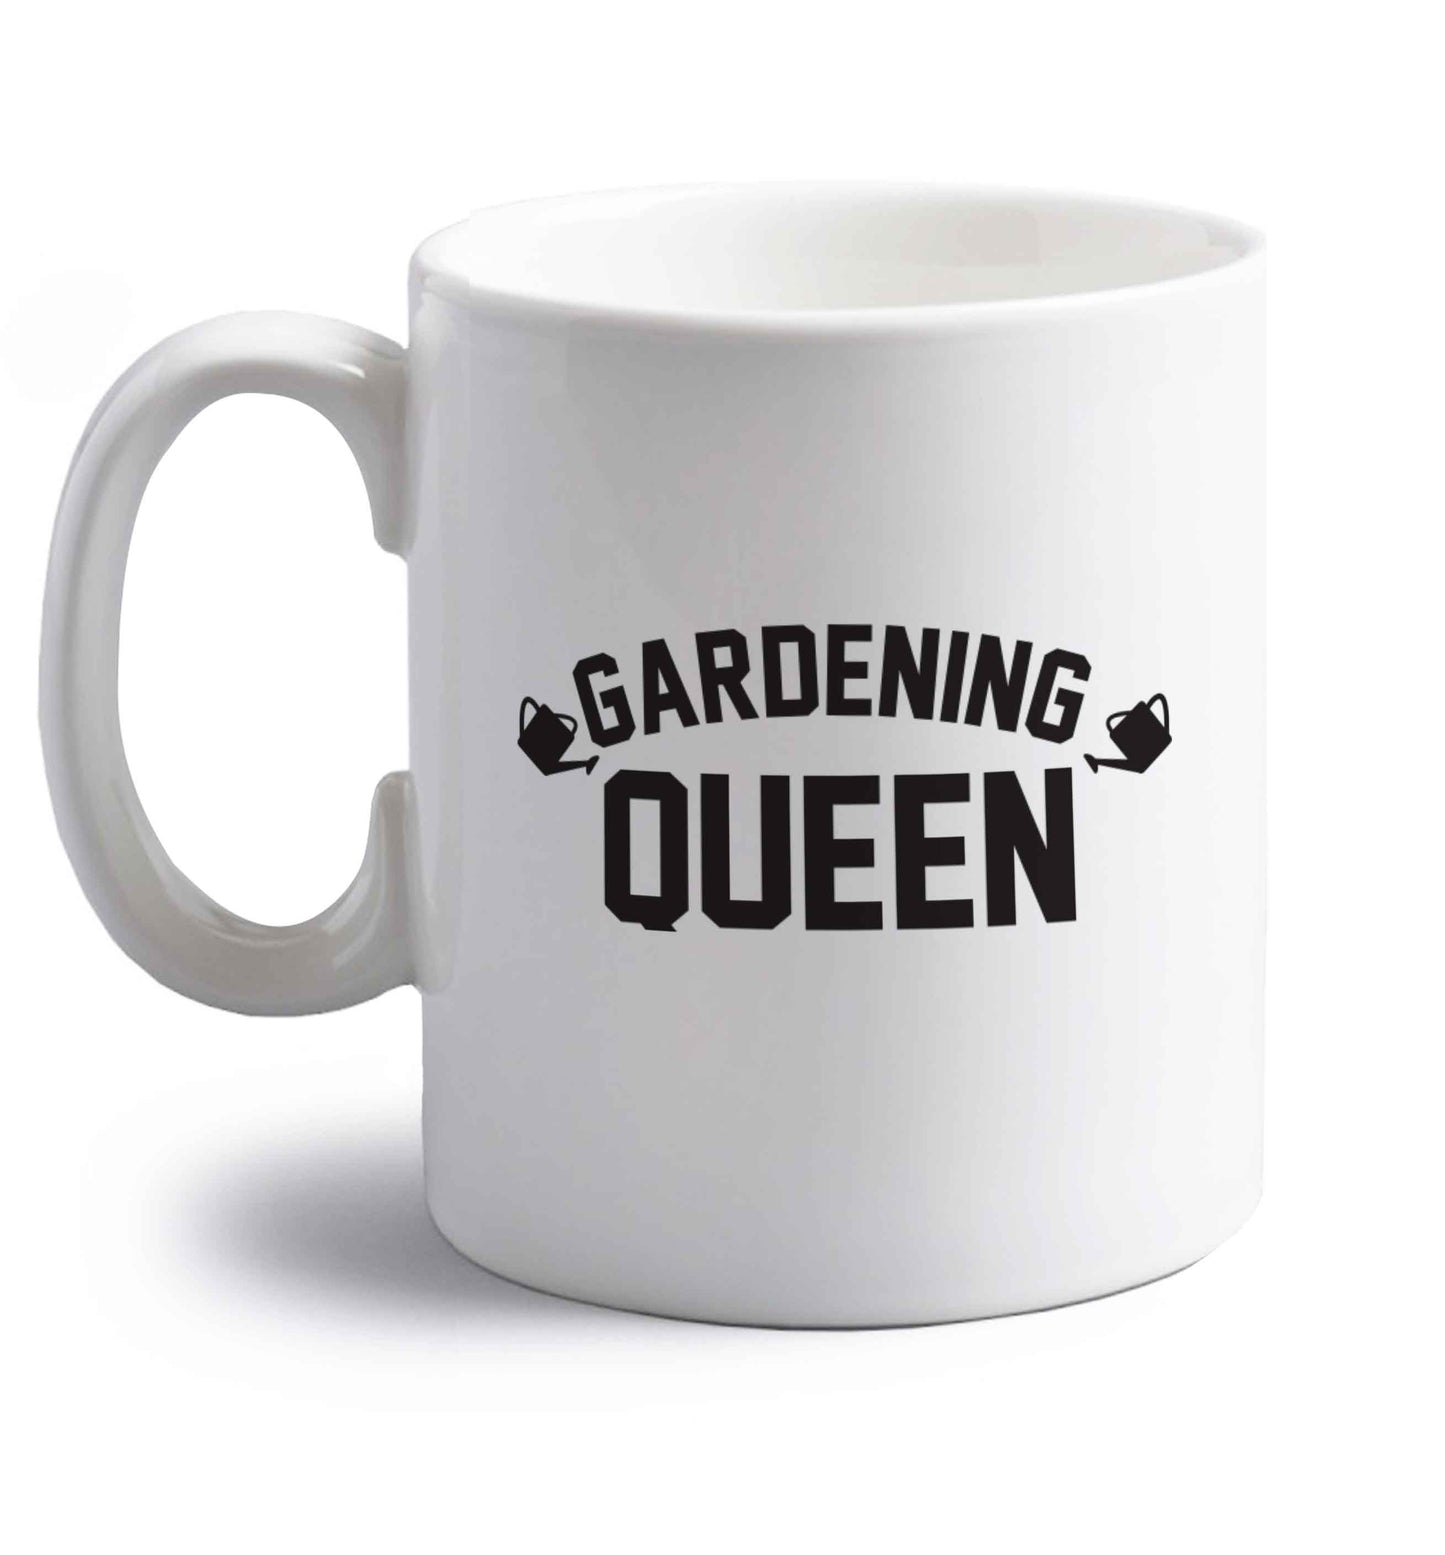 Gardening queen right handed white ceramic mug 